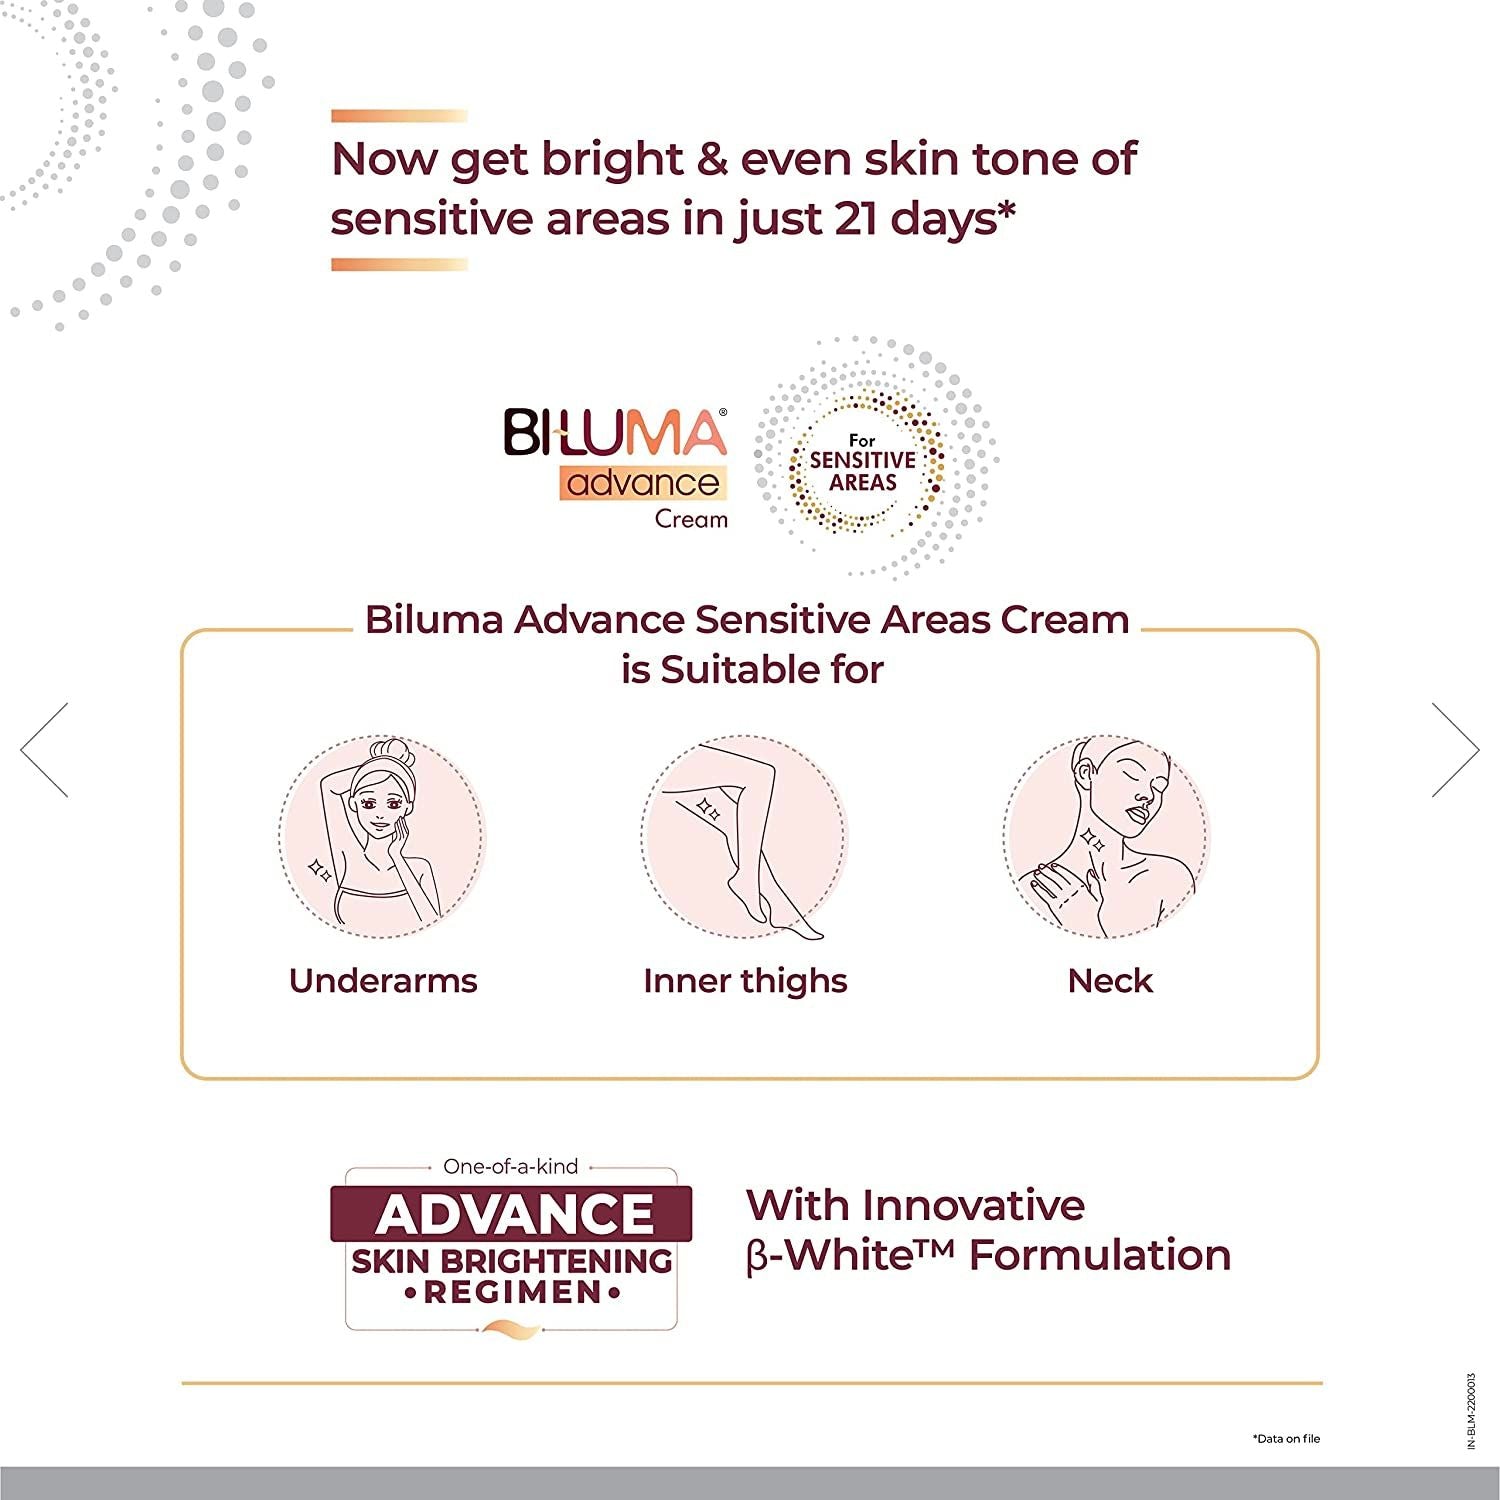 BI-LUMA Advance Sensitive Areas Brightening Cream For Even Skin Tone & Glow, Soothes Sensitive Skin, 25g